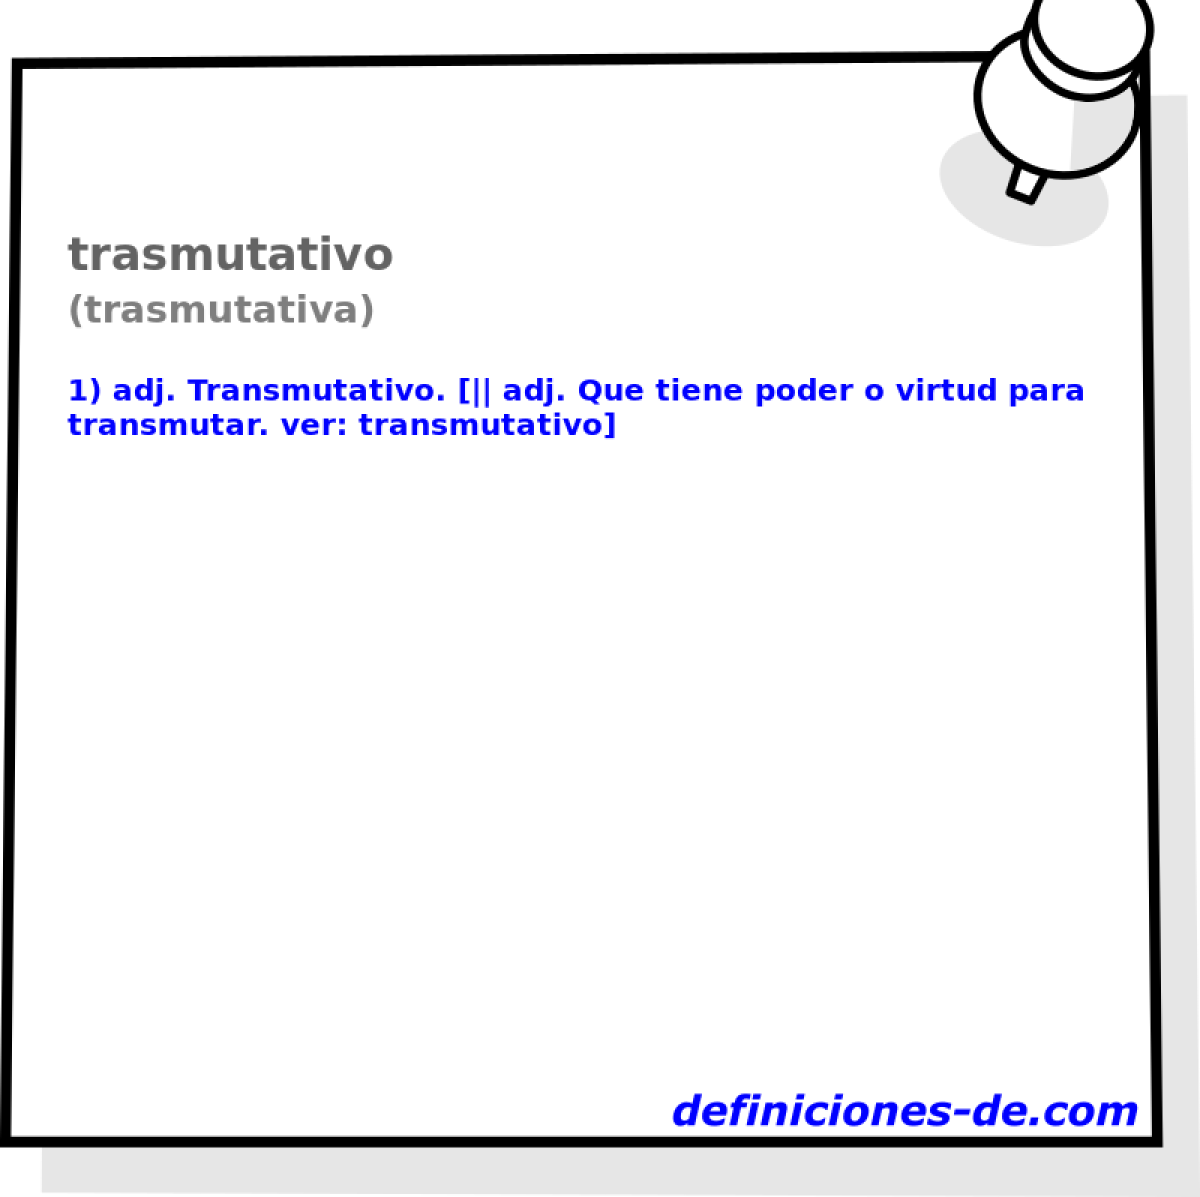 trasmutativo (trasmutativa)